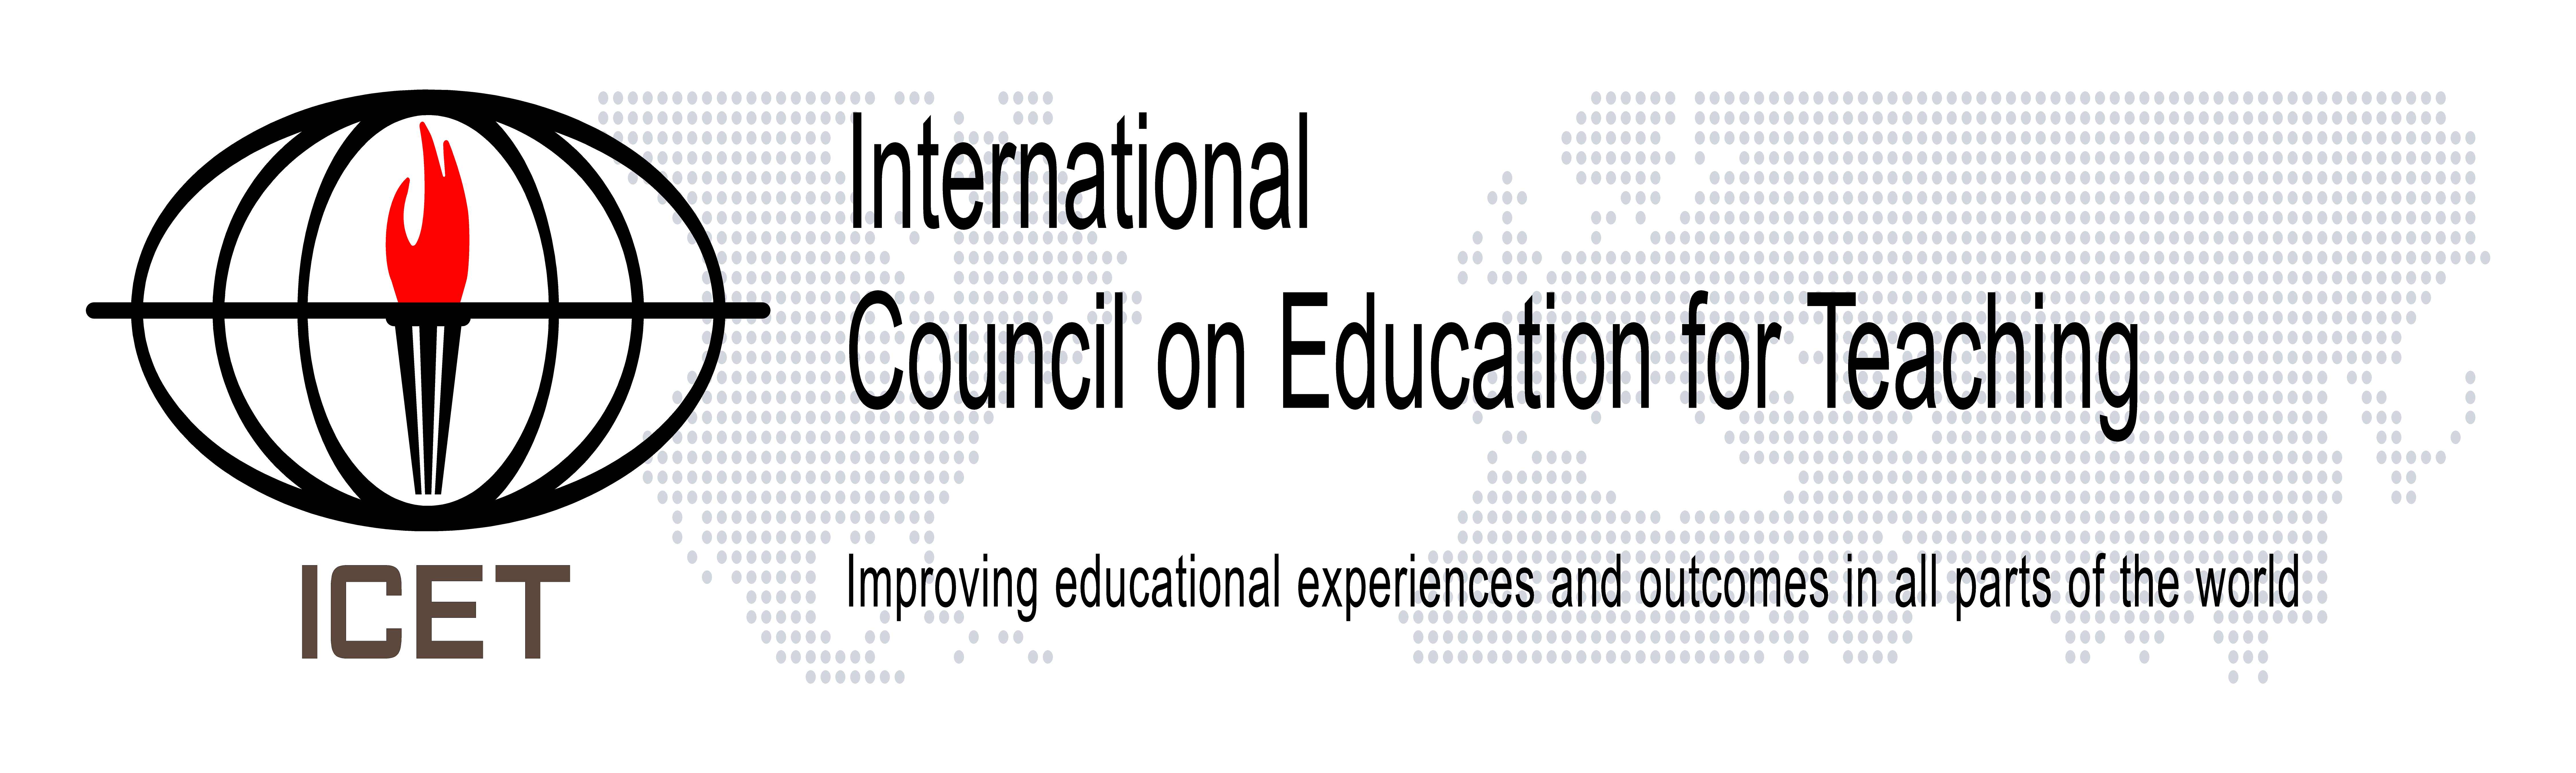 International Council on Education for Teaching logo